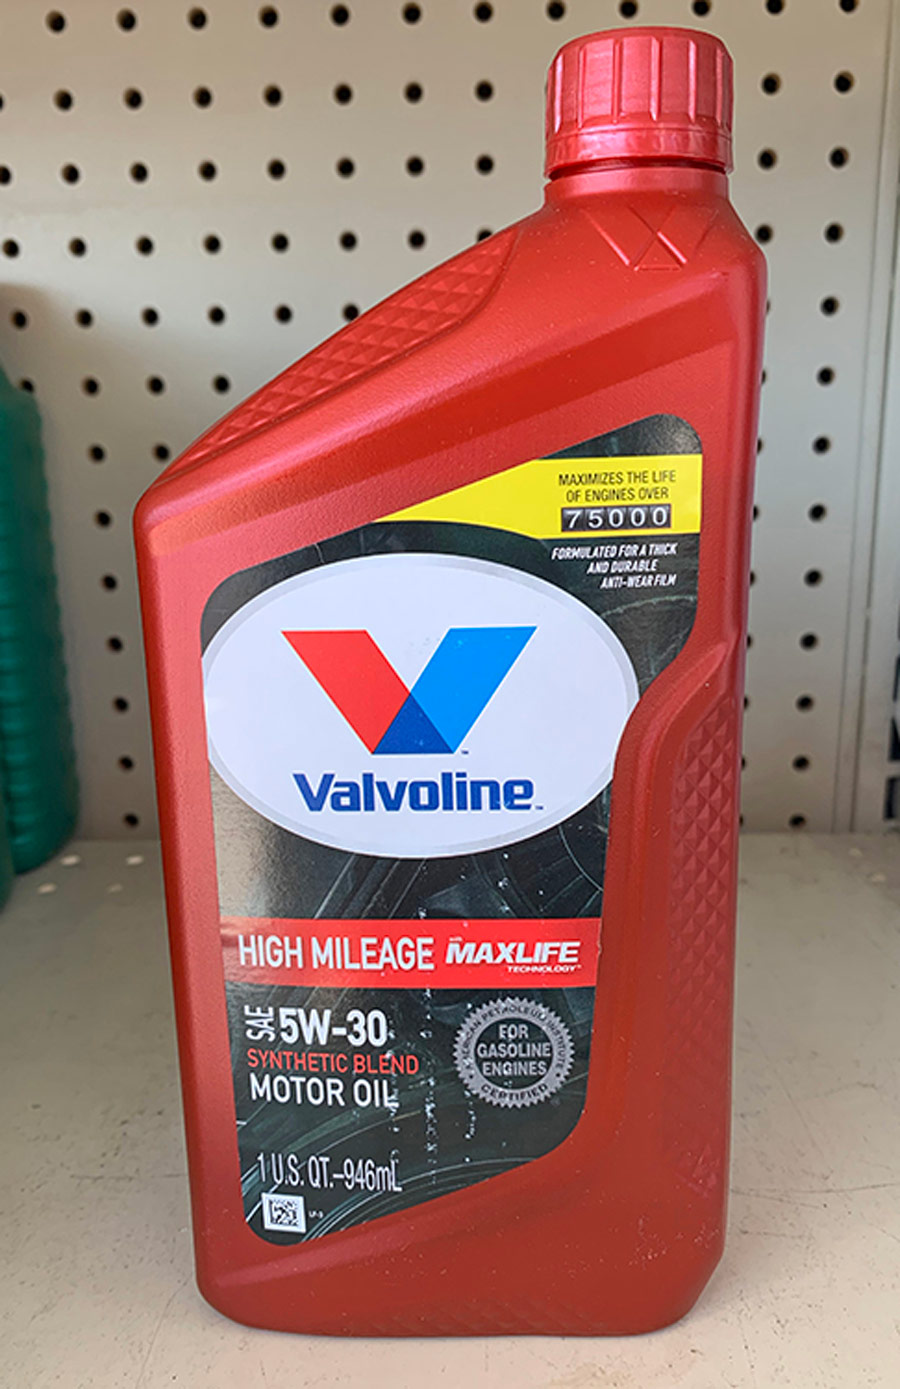 Valvoline 5W-30 grade oil on a shelf